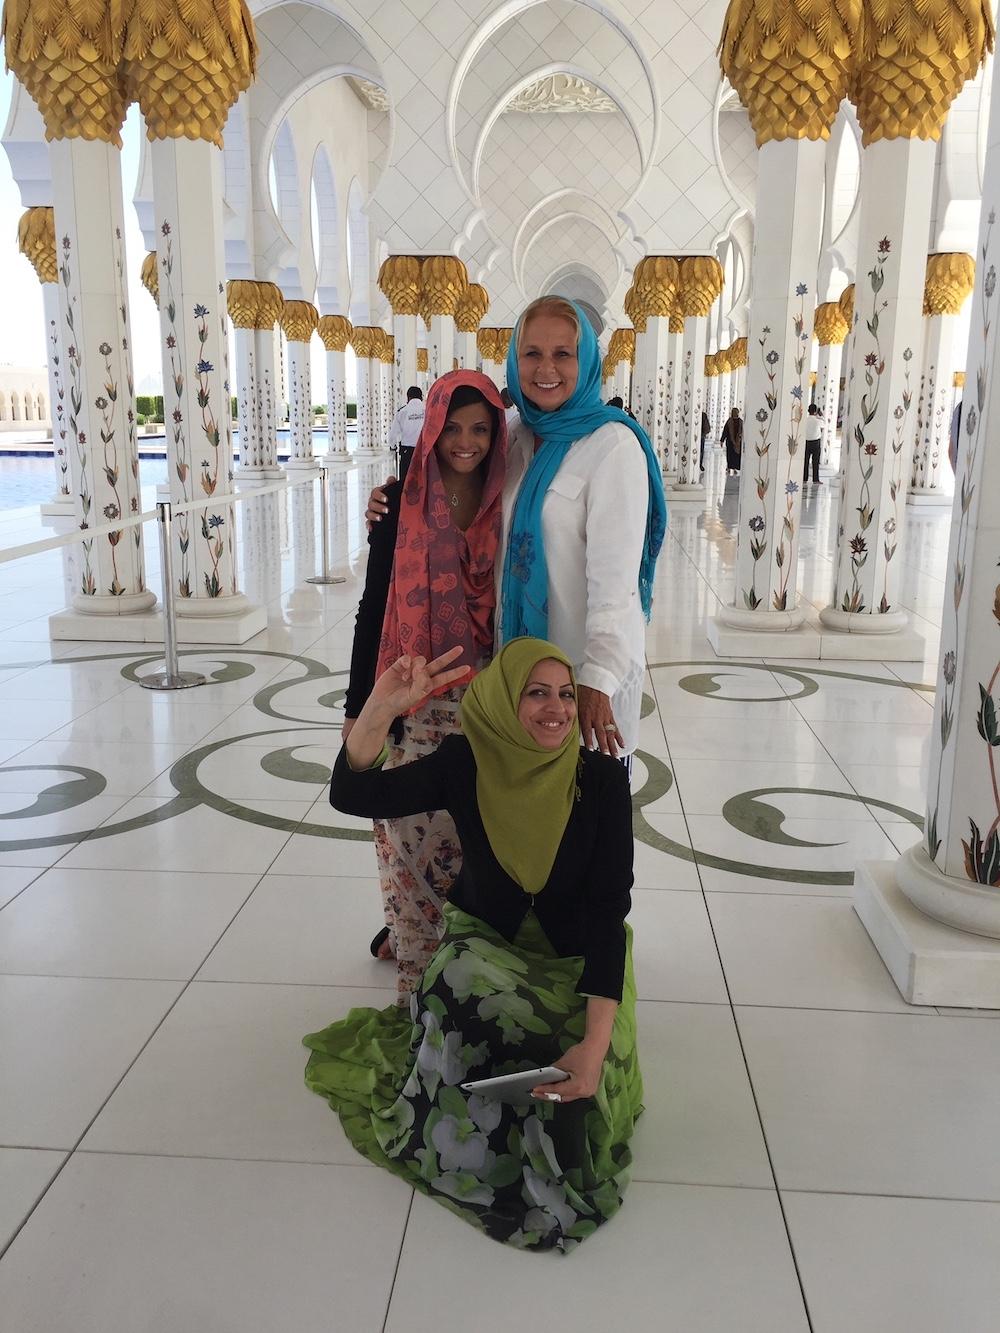 Barbara, Teeba, and Dunia visiting a mosque in Abu-Dhabi. (Photo courtesy of <a href="https://www.facebook.com/barbara.marlowe1">Barbara Marlowe</a>)